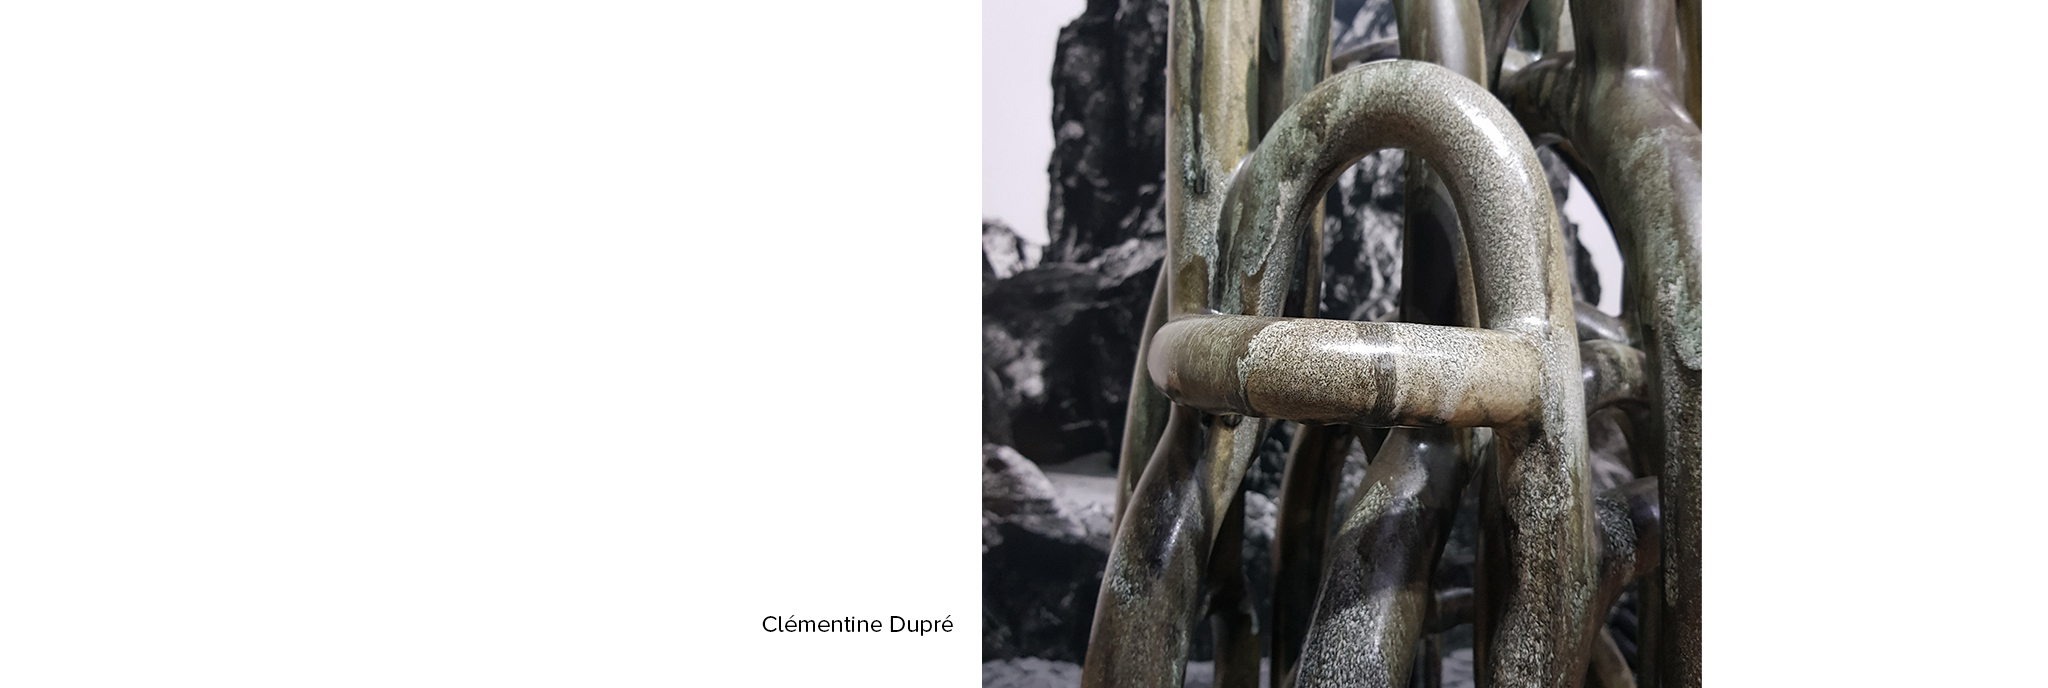 Clementine Dupre 6